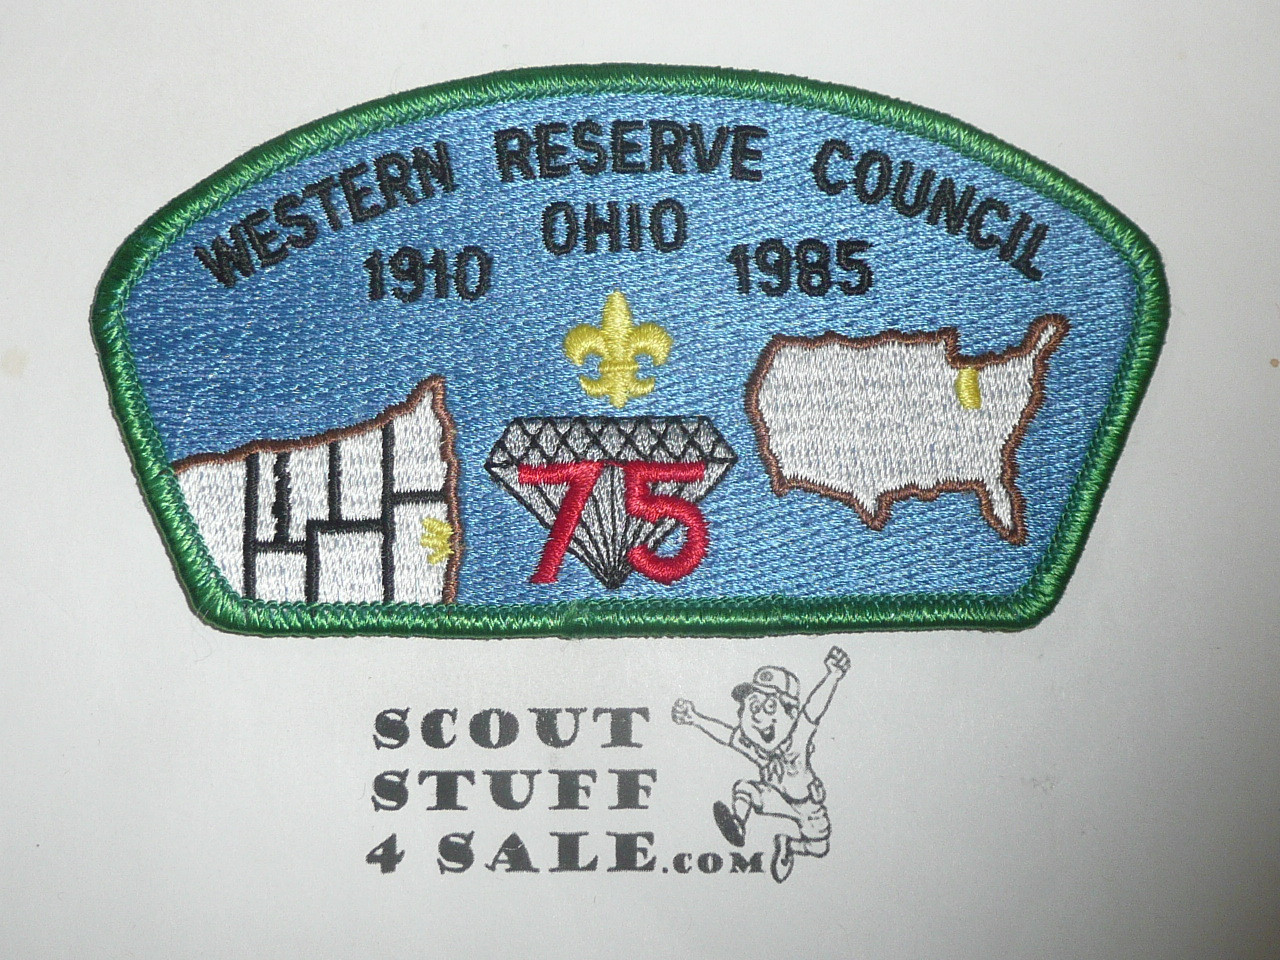 Western Reserve Council sa5 CSP - BSA 75th Anniversary - MERGED